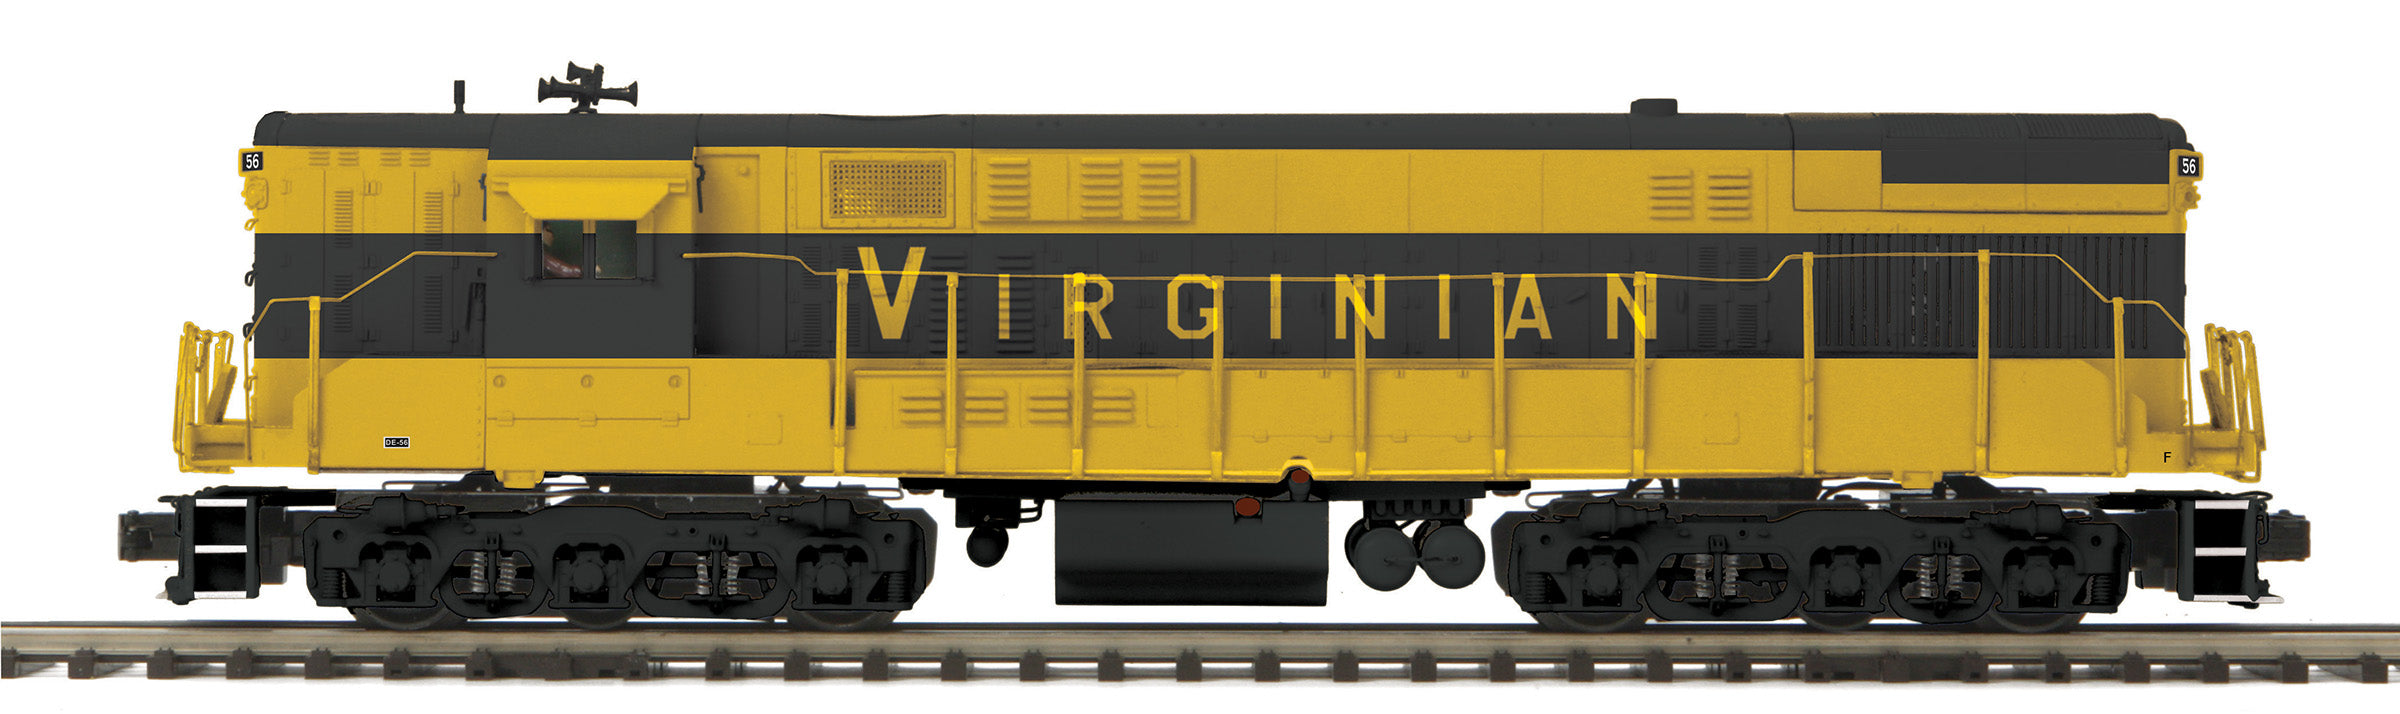 MTH 20-21651-1 - FM Train Master Diesel Engine "Virginian" #56 w/ PS3 (Hi-Rail Wheels)